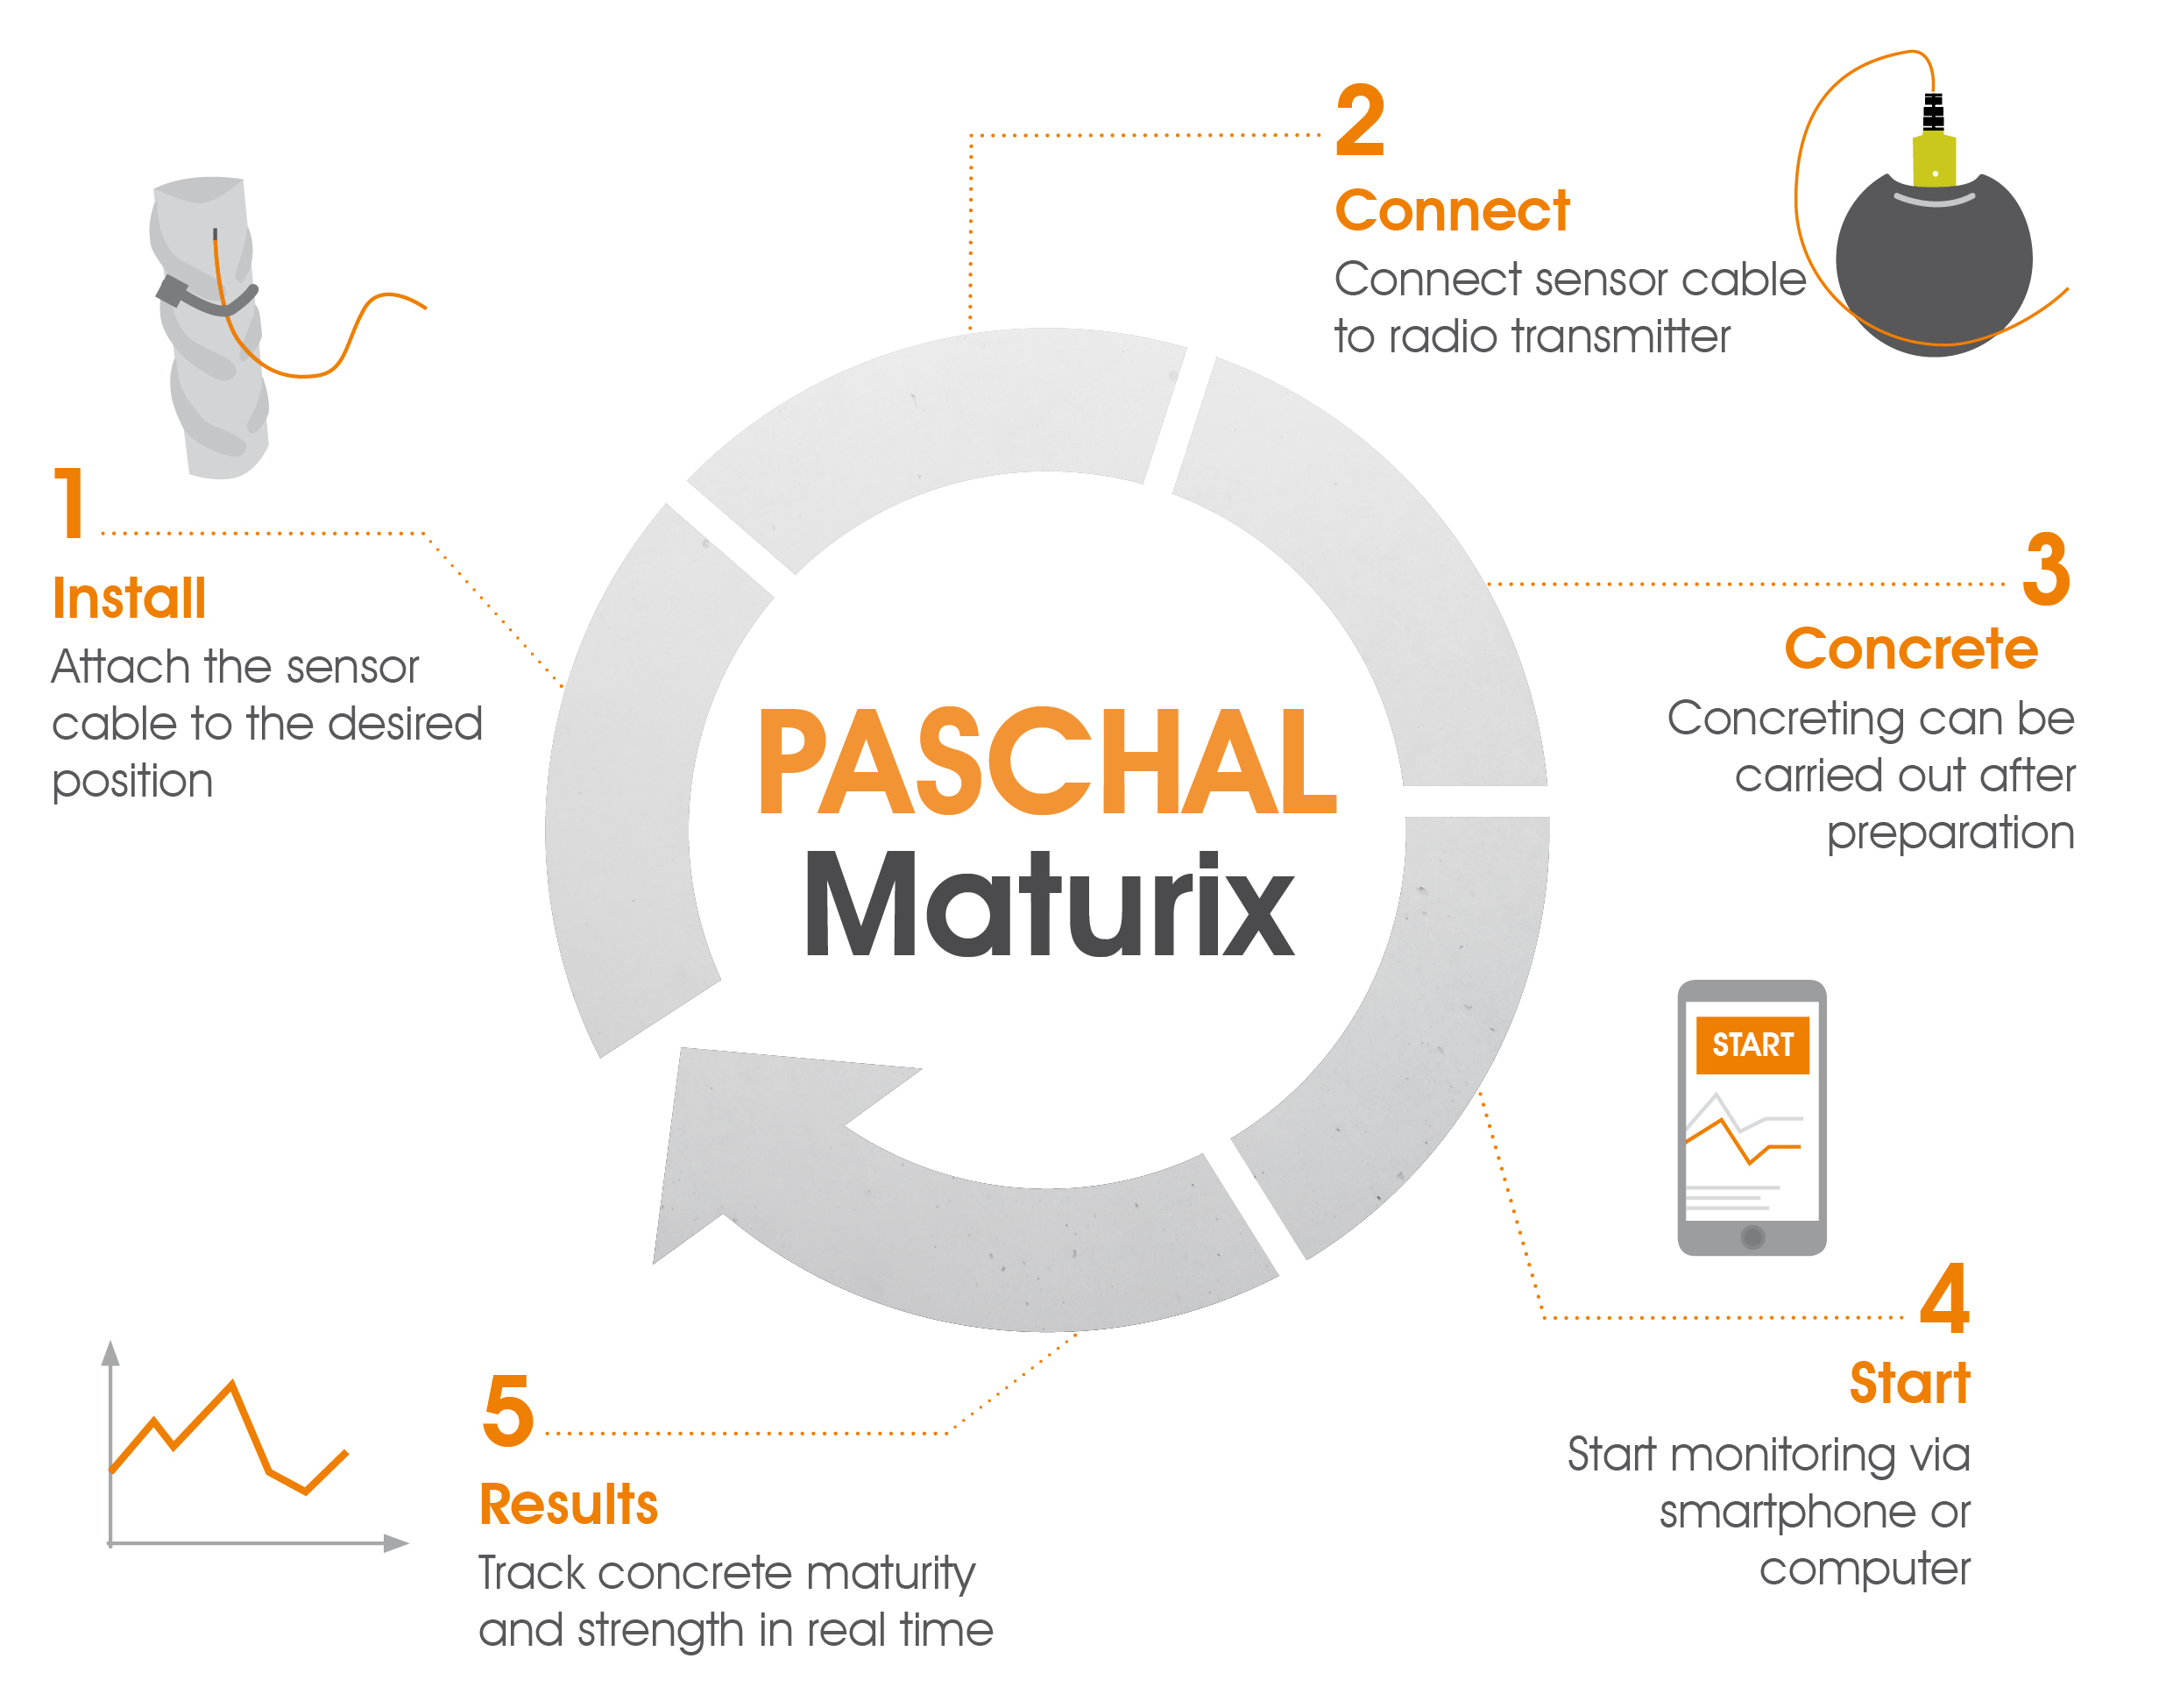 Functionality of PASCHAL Maturix